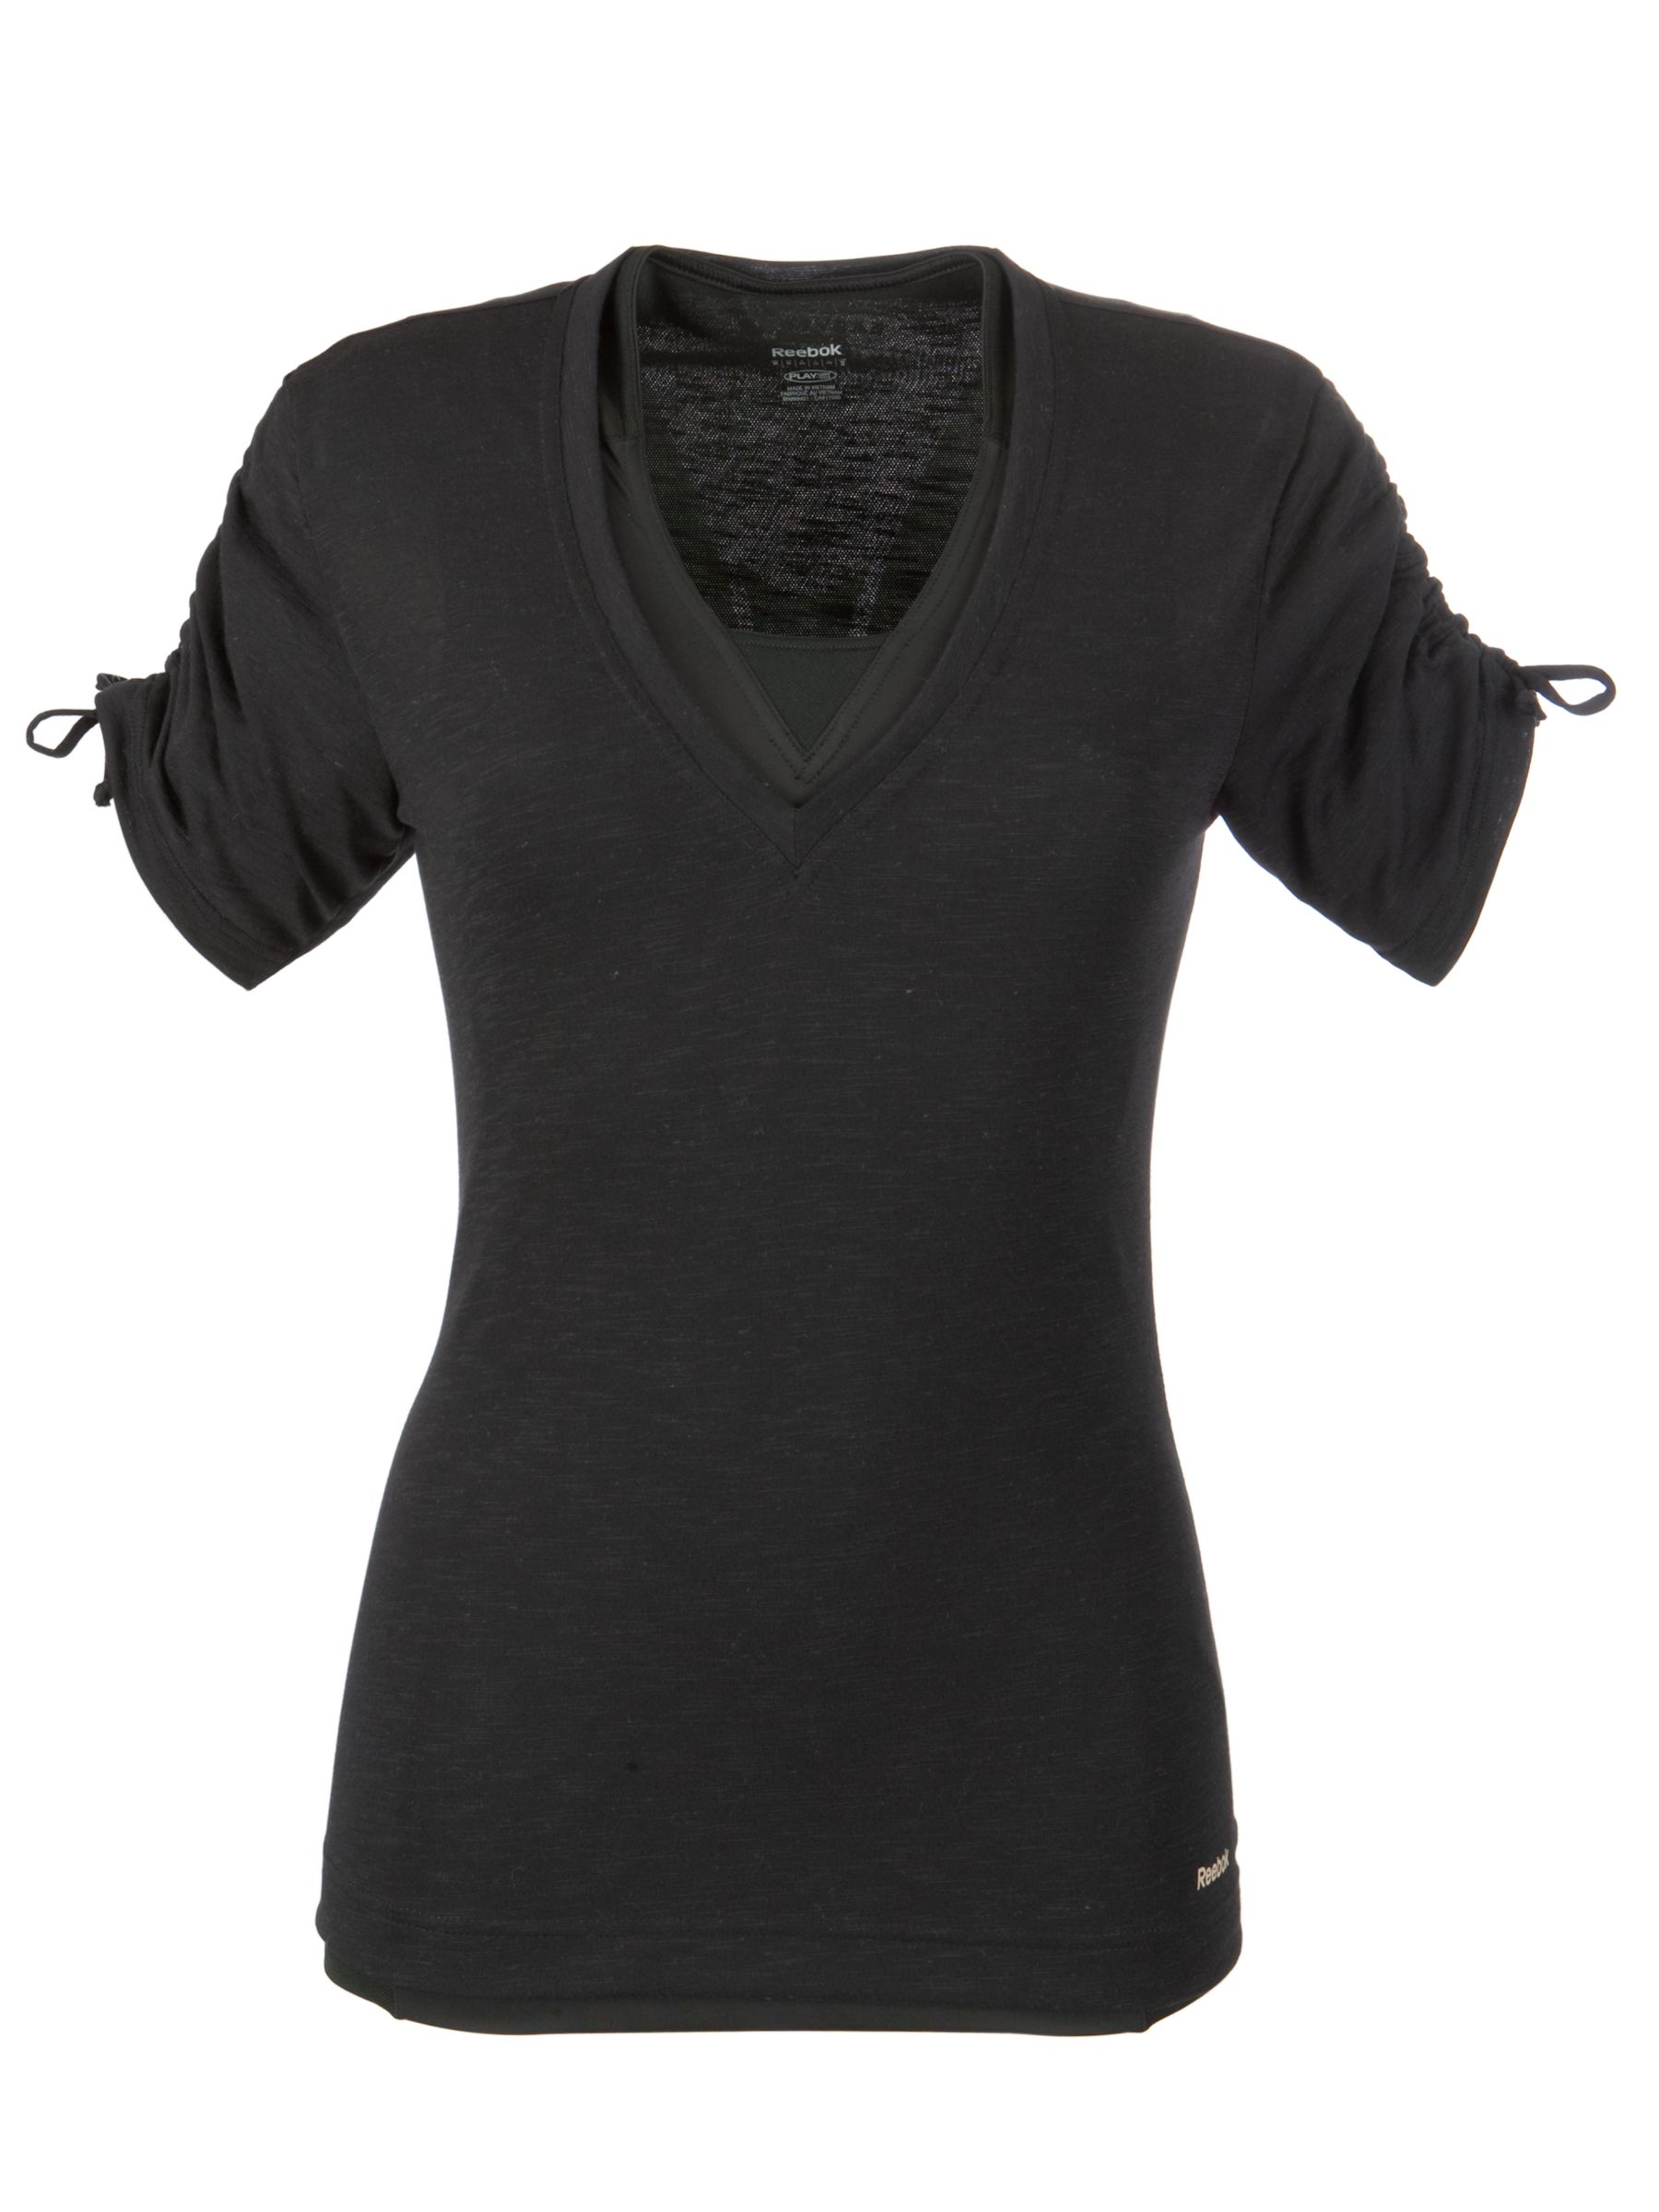 Reebok Easytone Double Layer T-Shirt, Black